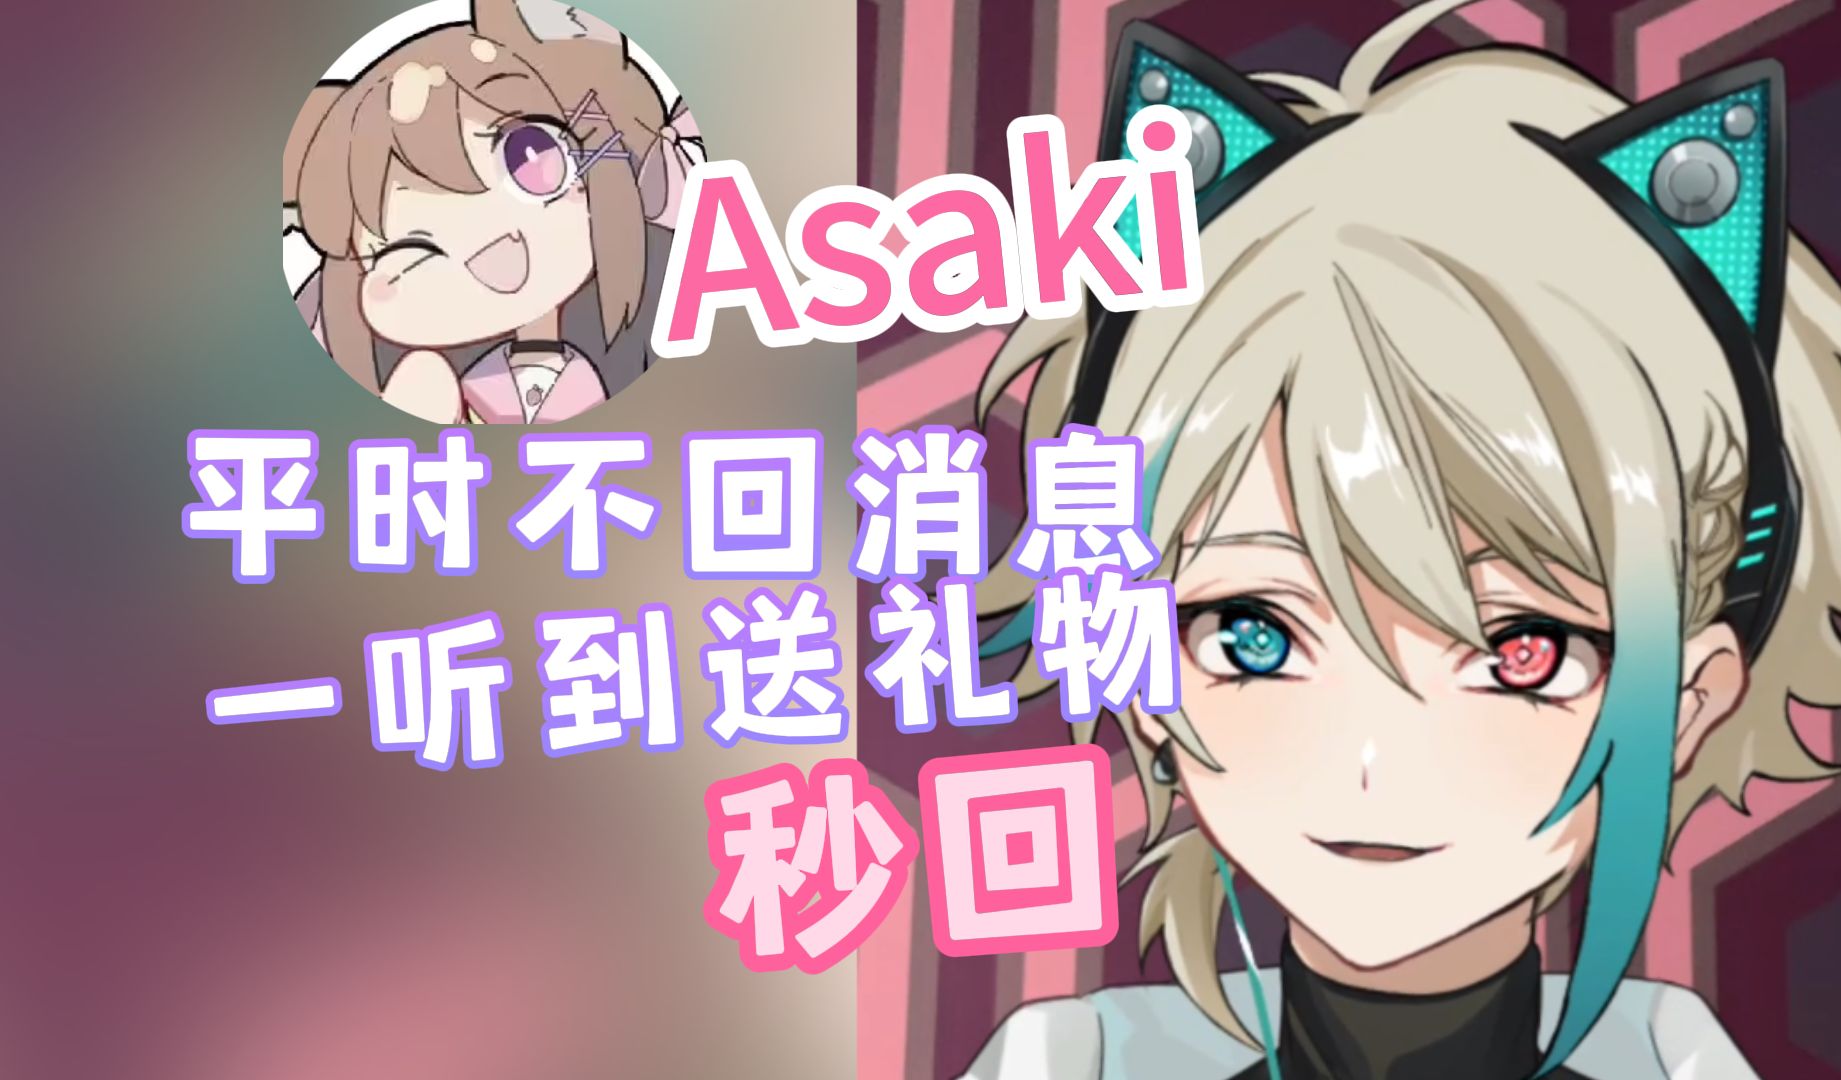 【Aza/Asaki】在直播中提到了妹妹